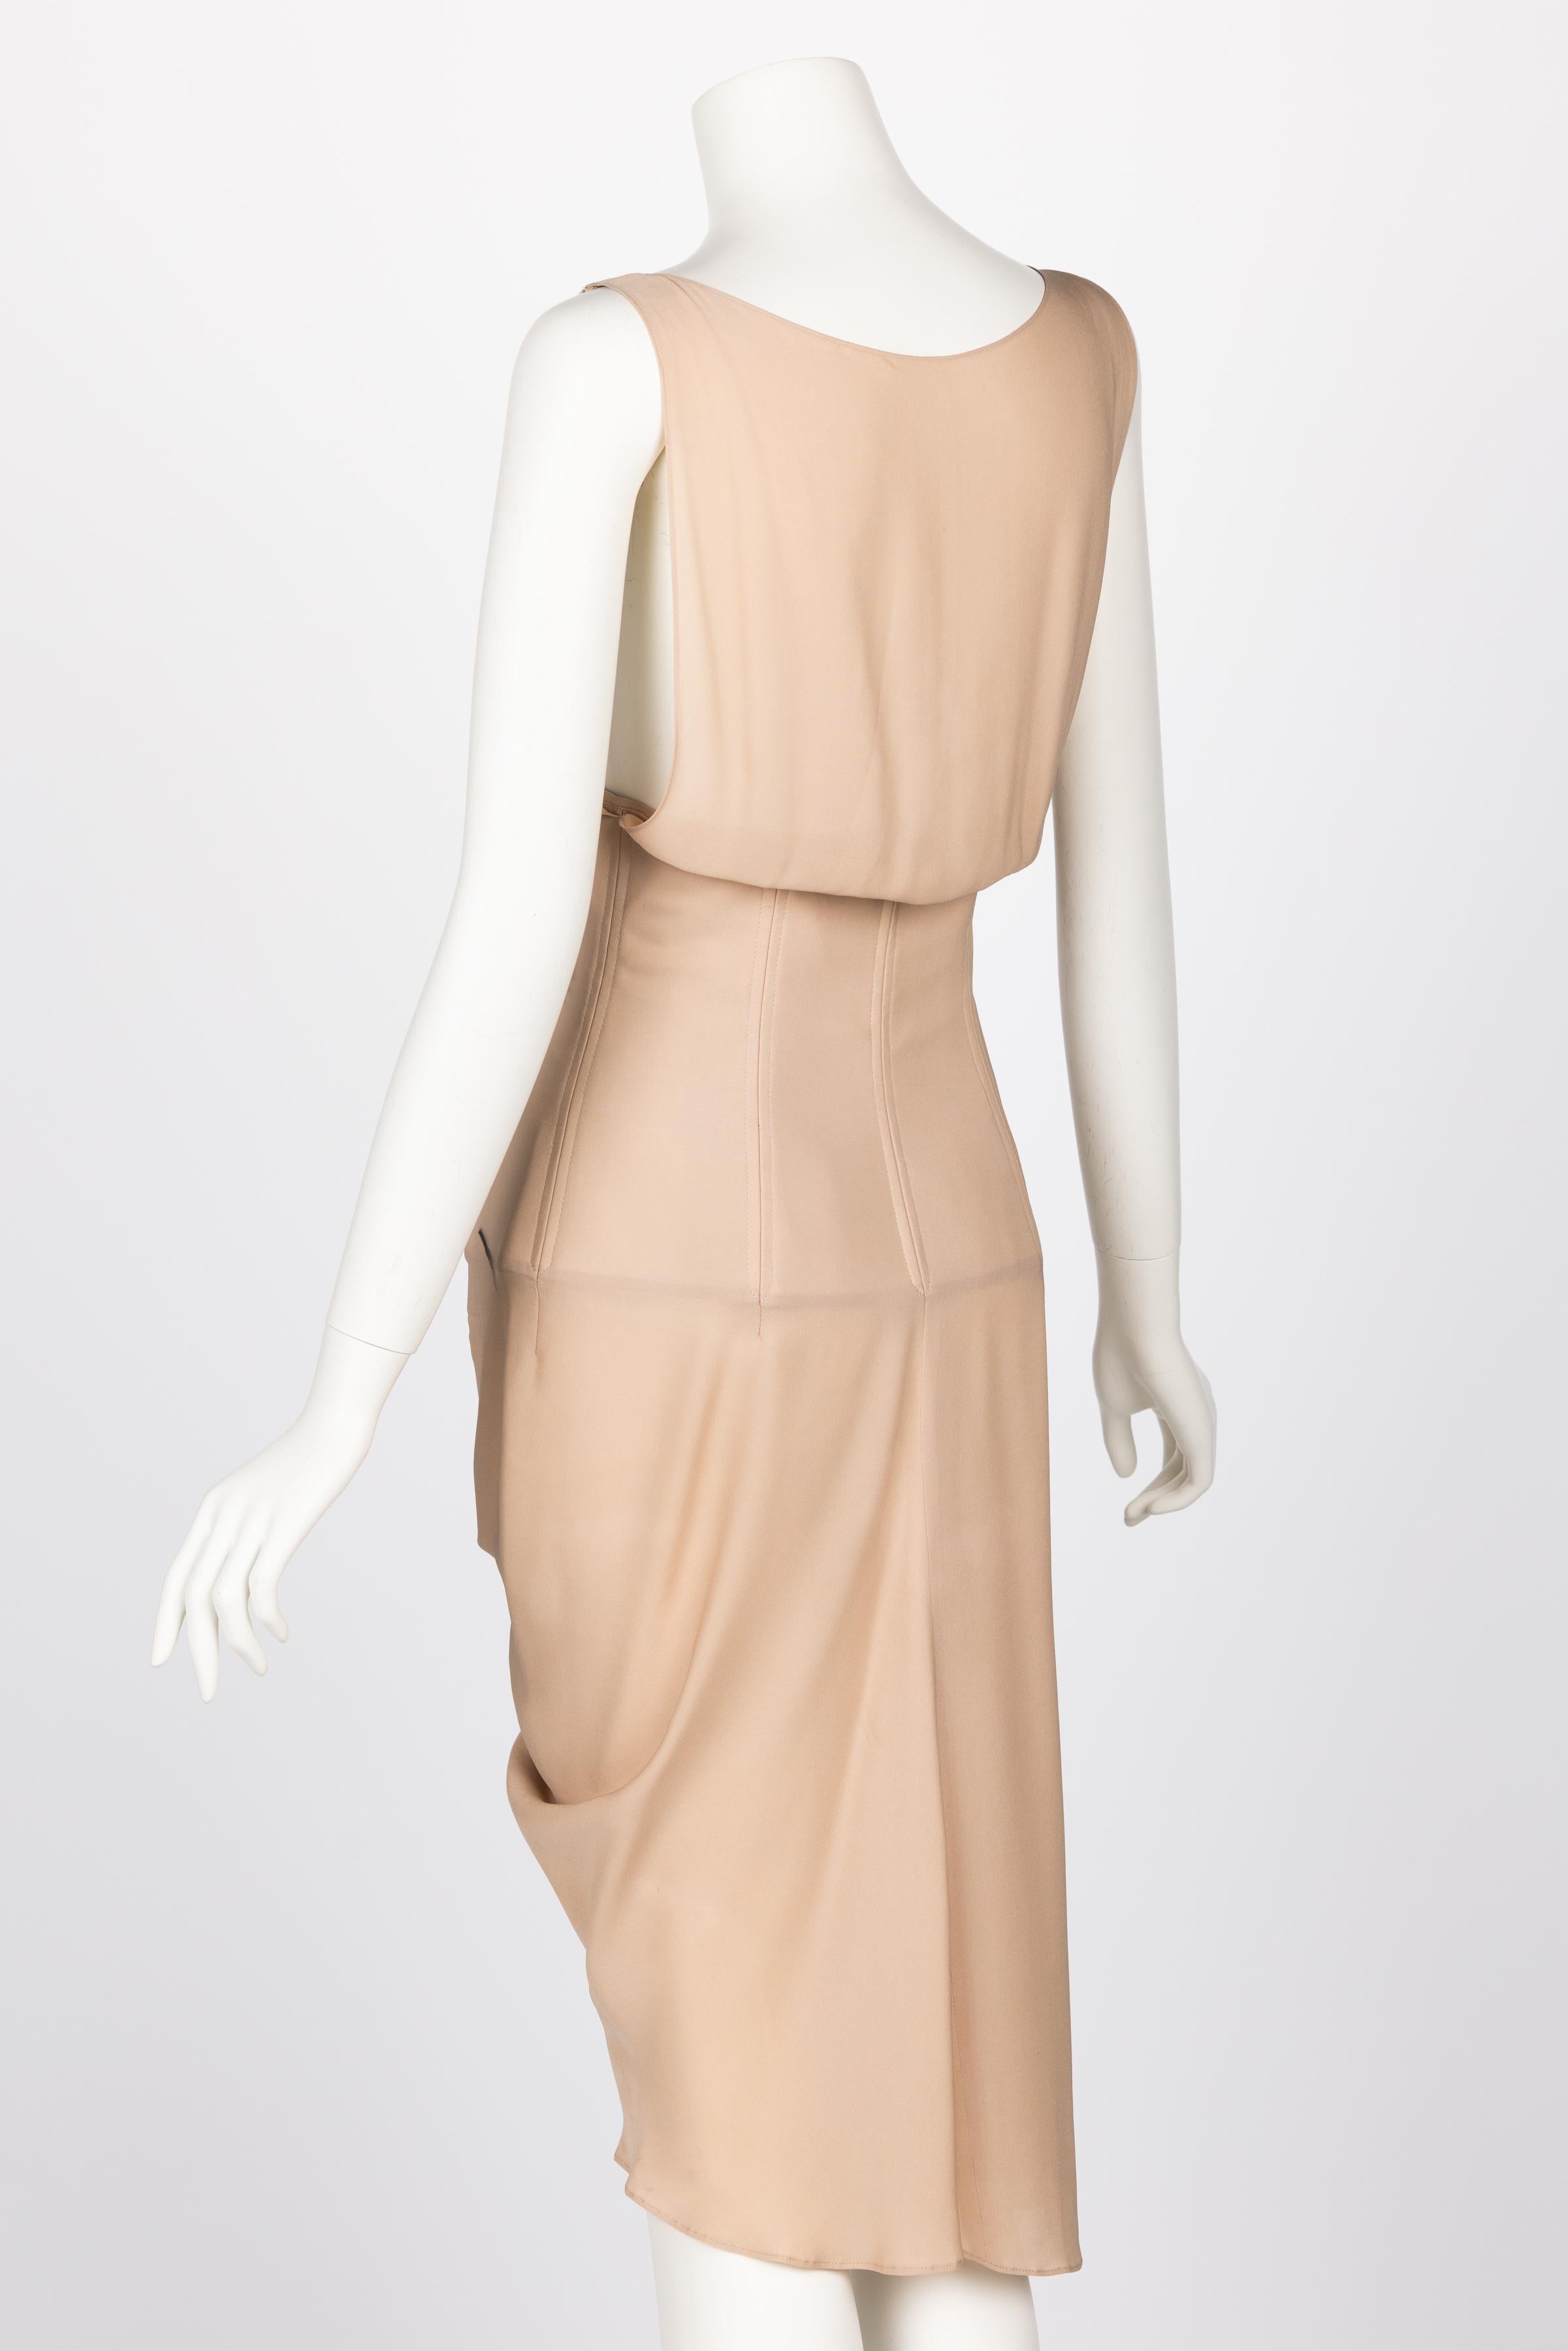 Women's Chloé Stella McCartney F/W 2001 Draped Silk Face Corset Dress For Sale